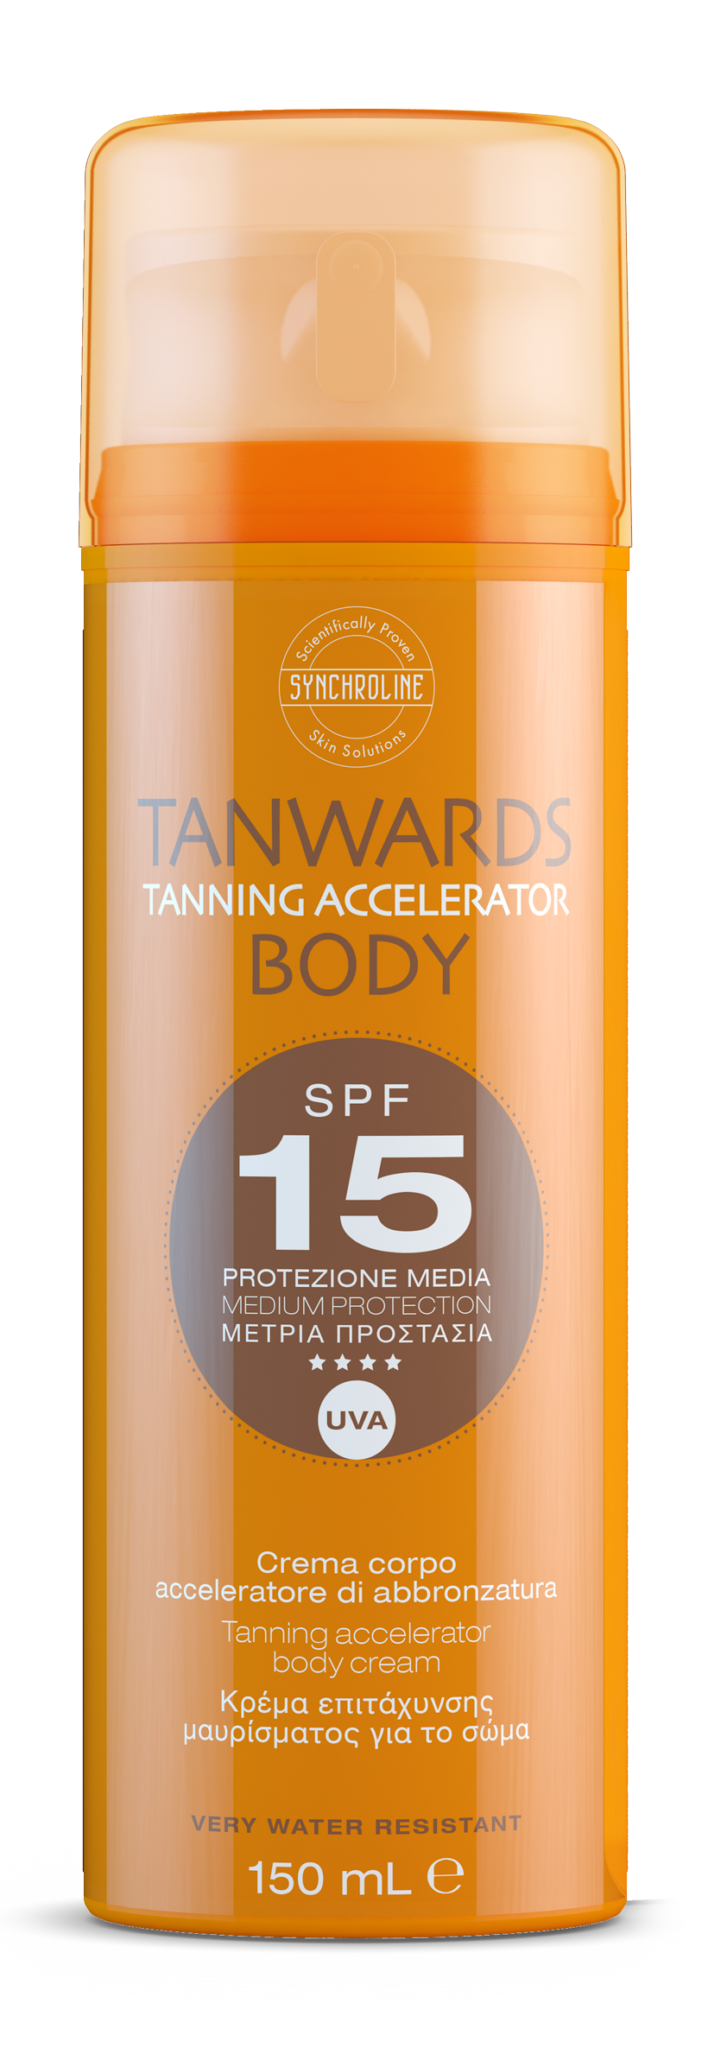 Synchroline Tanwards Tanning Accelerator Body Cream SPF15